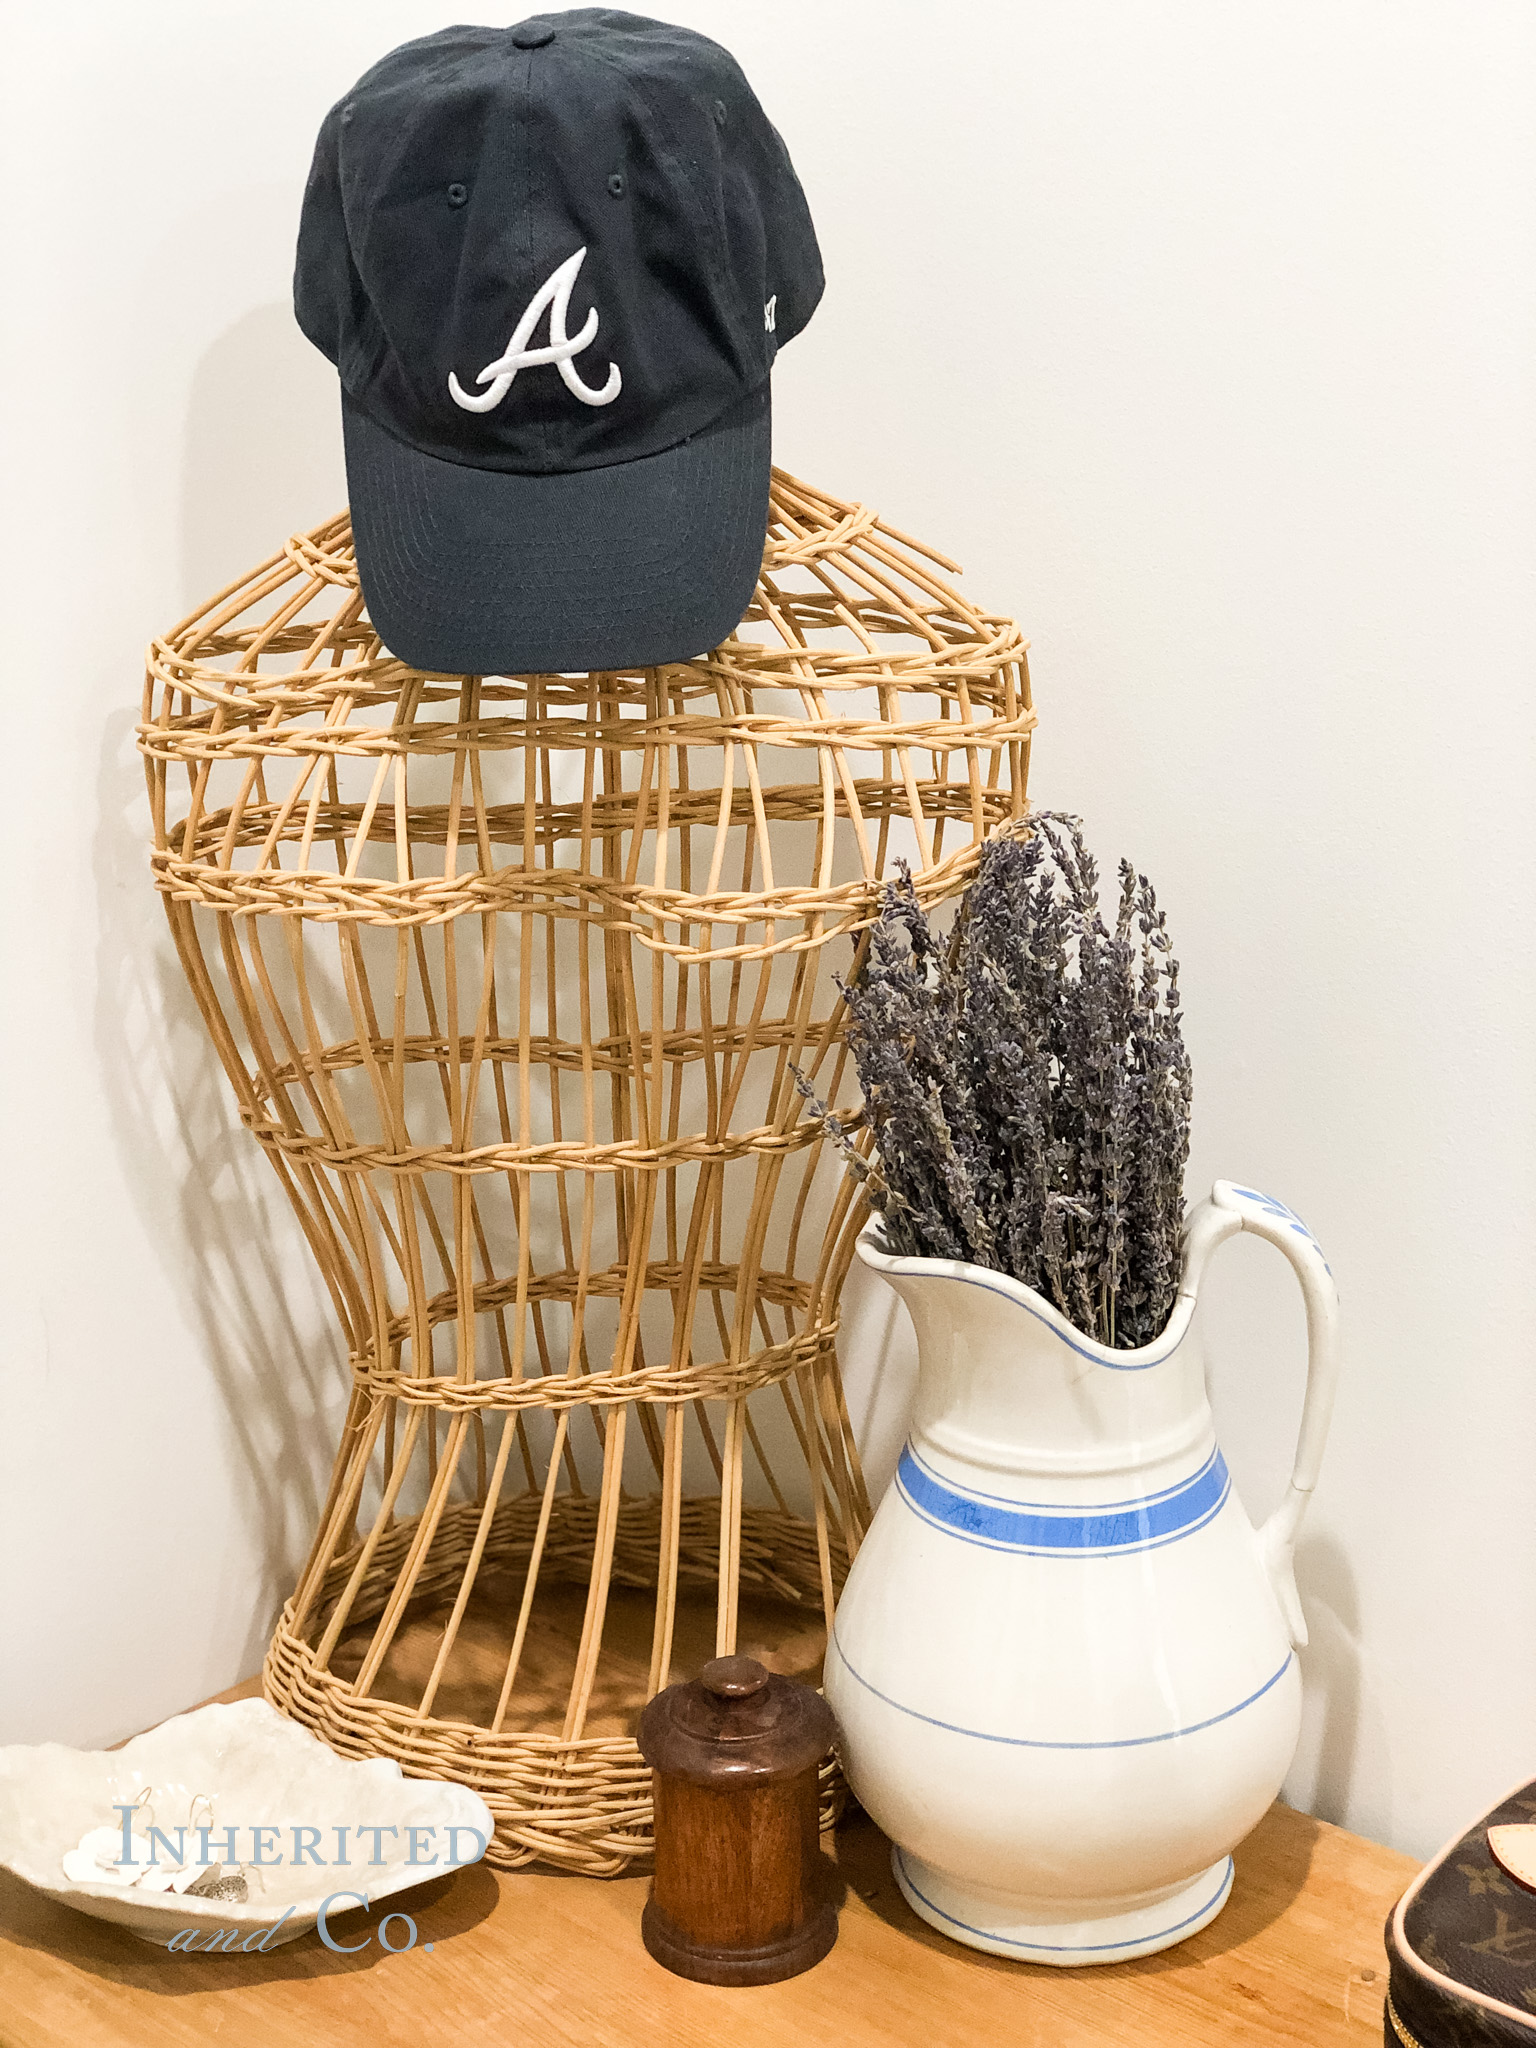 Atlanta Braves hat tossed atop a vintage wicker mannequin